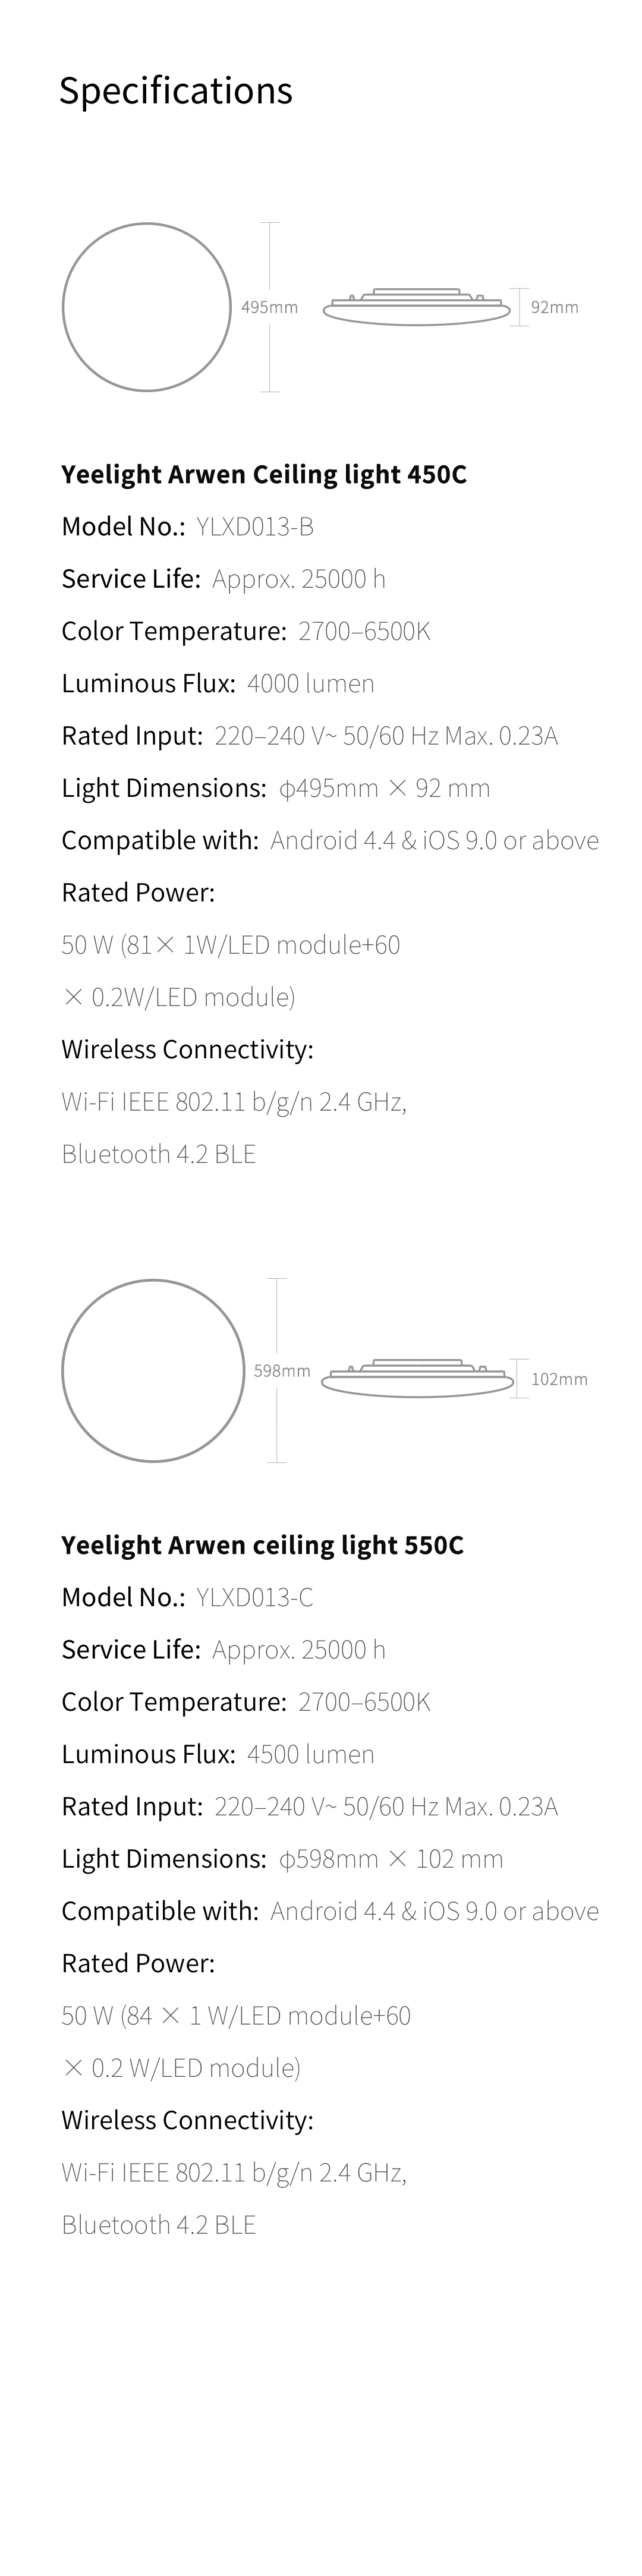 Yeelight-Arwen-YLXD013-B-Smart-LED-Ceiling-Colorful-Light-450C-Adjustable-Brightness-Work-With-OK-Go-1830713-3